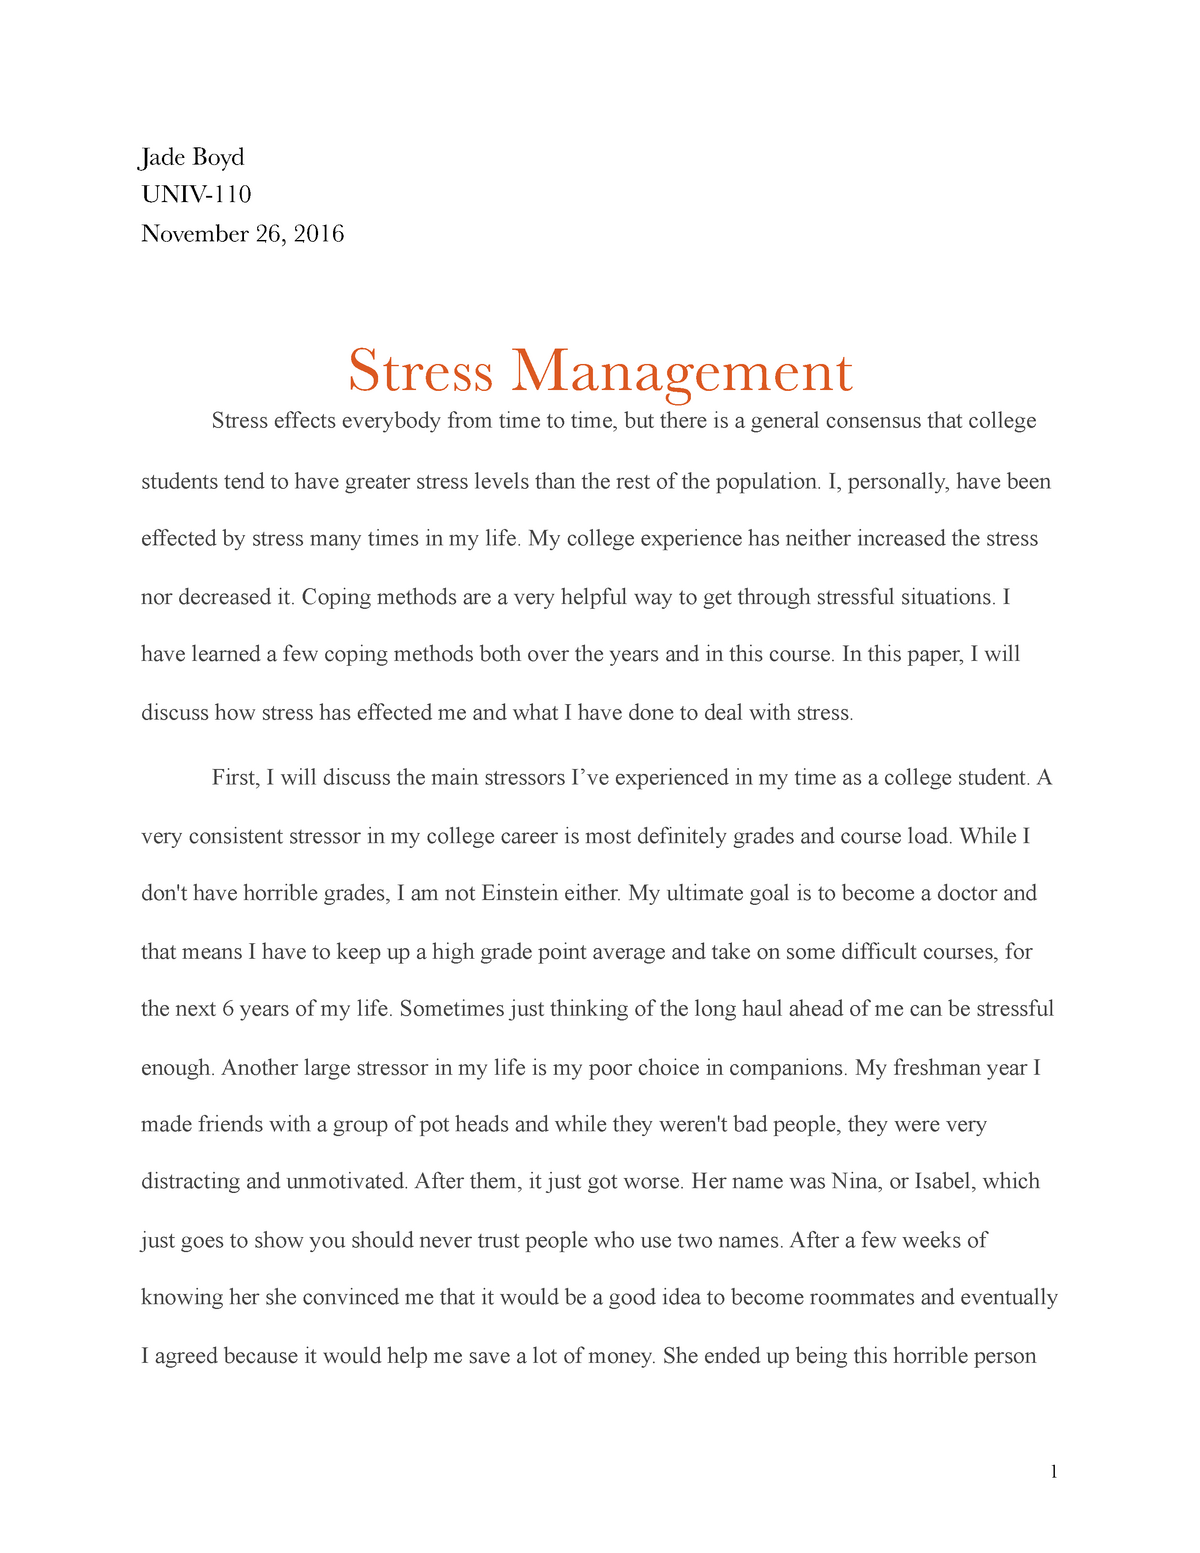 organizational change and stress management essay